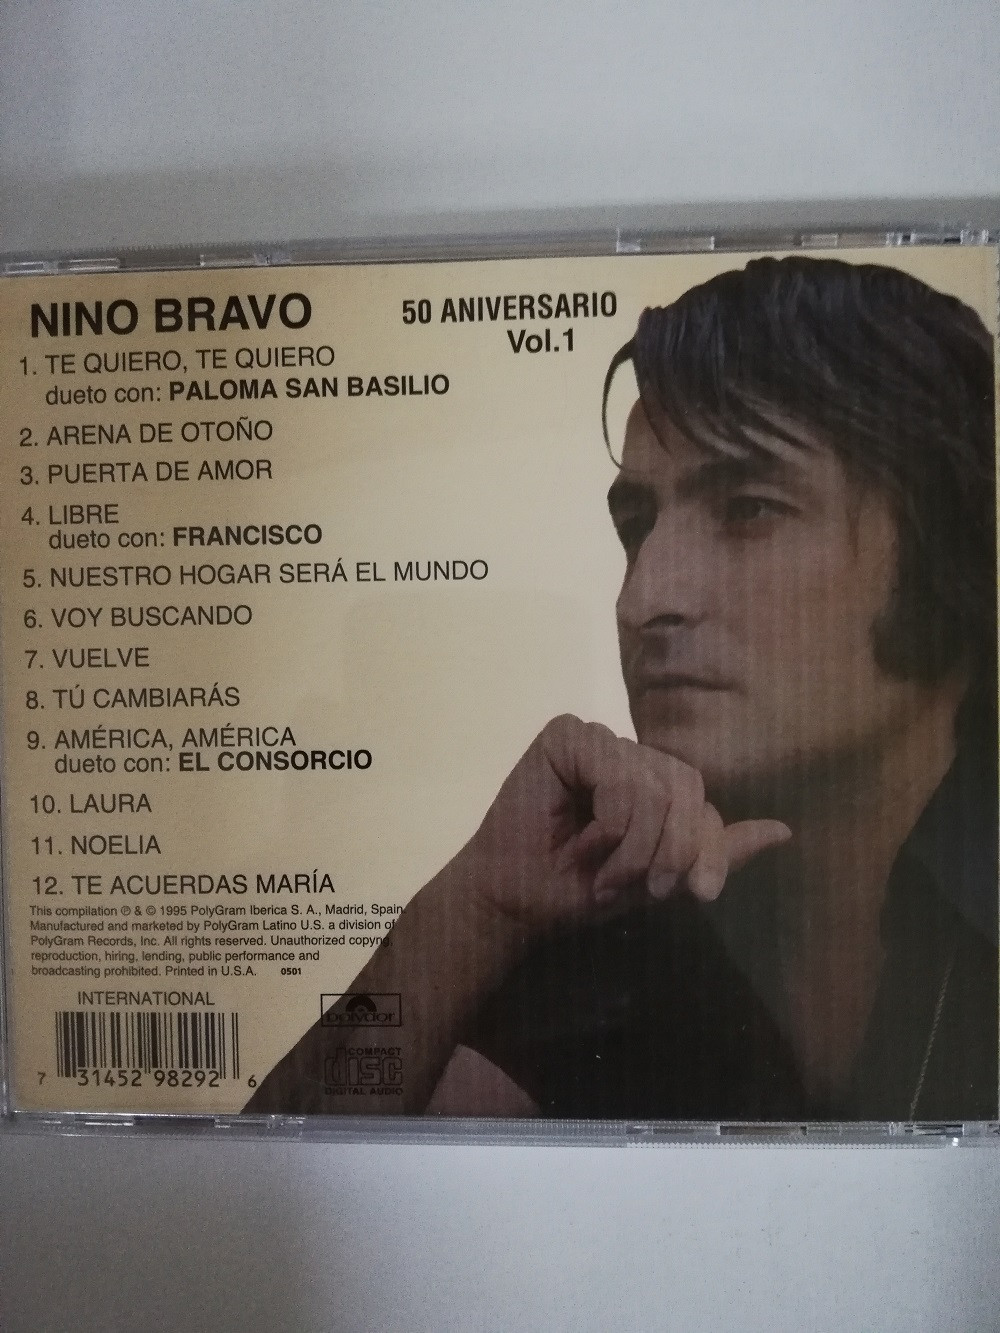 Imagen CD NINO BRAVO - 50 ANIVERSARIO VOL. 1 2